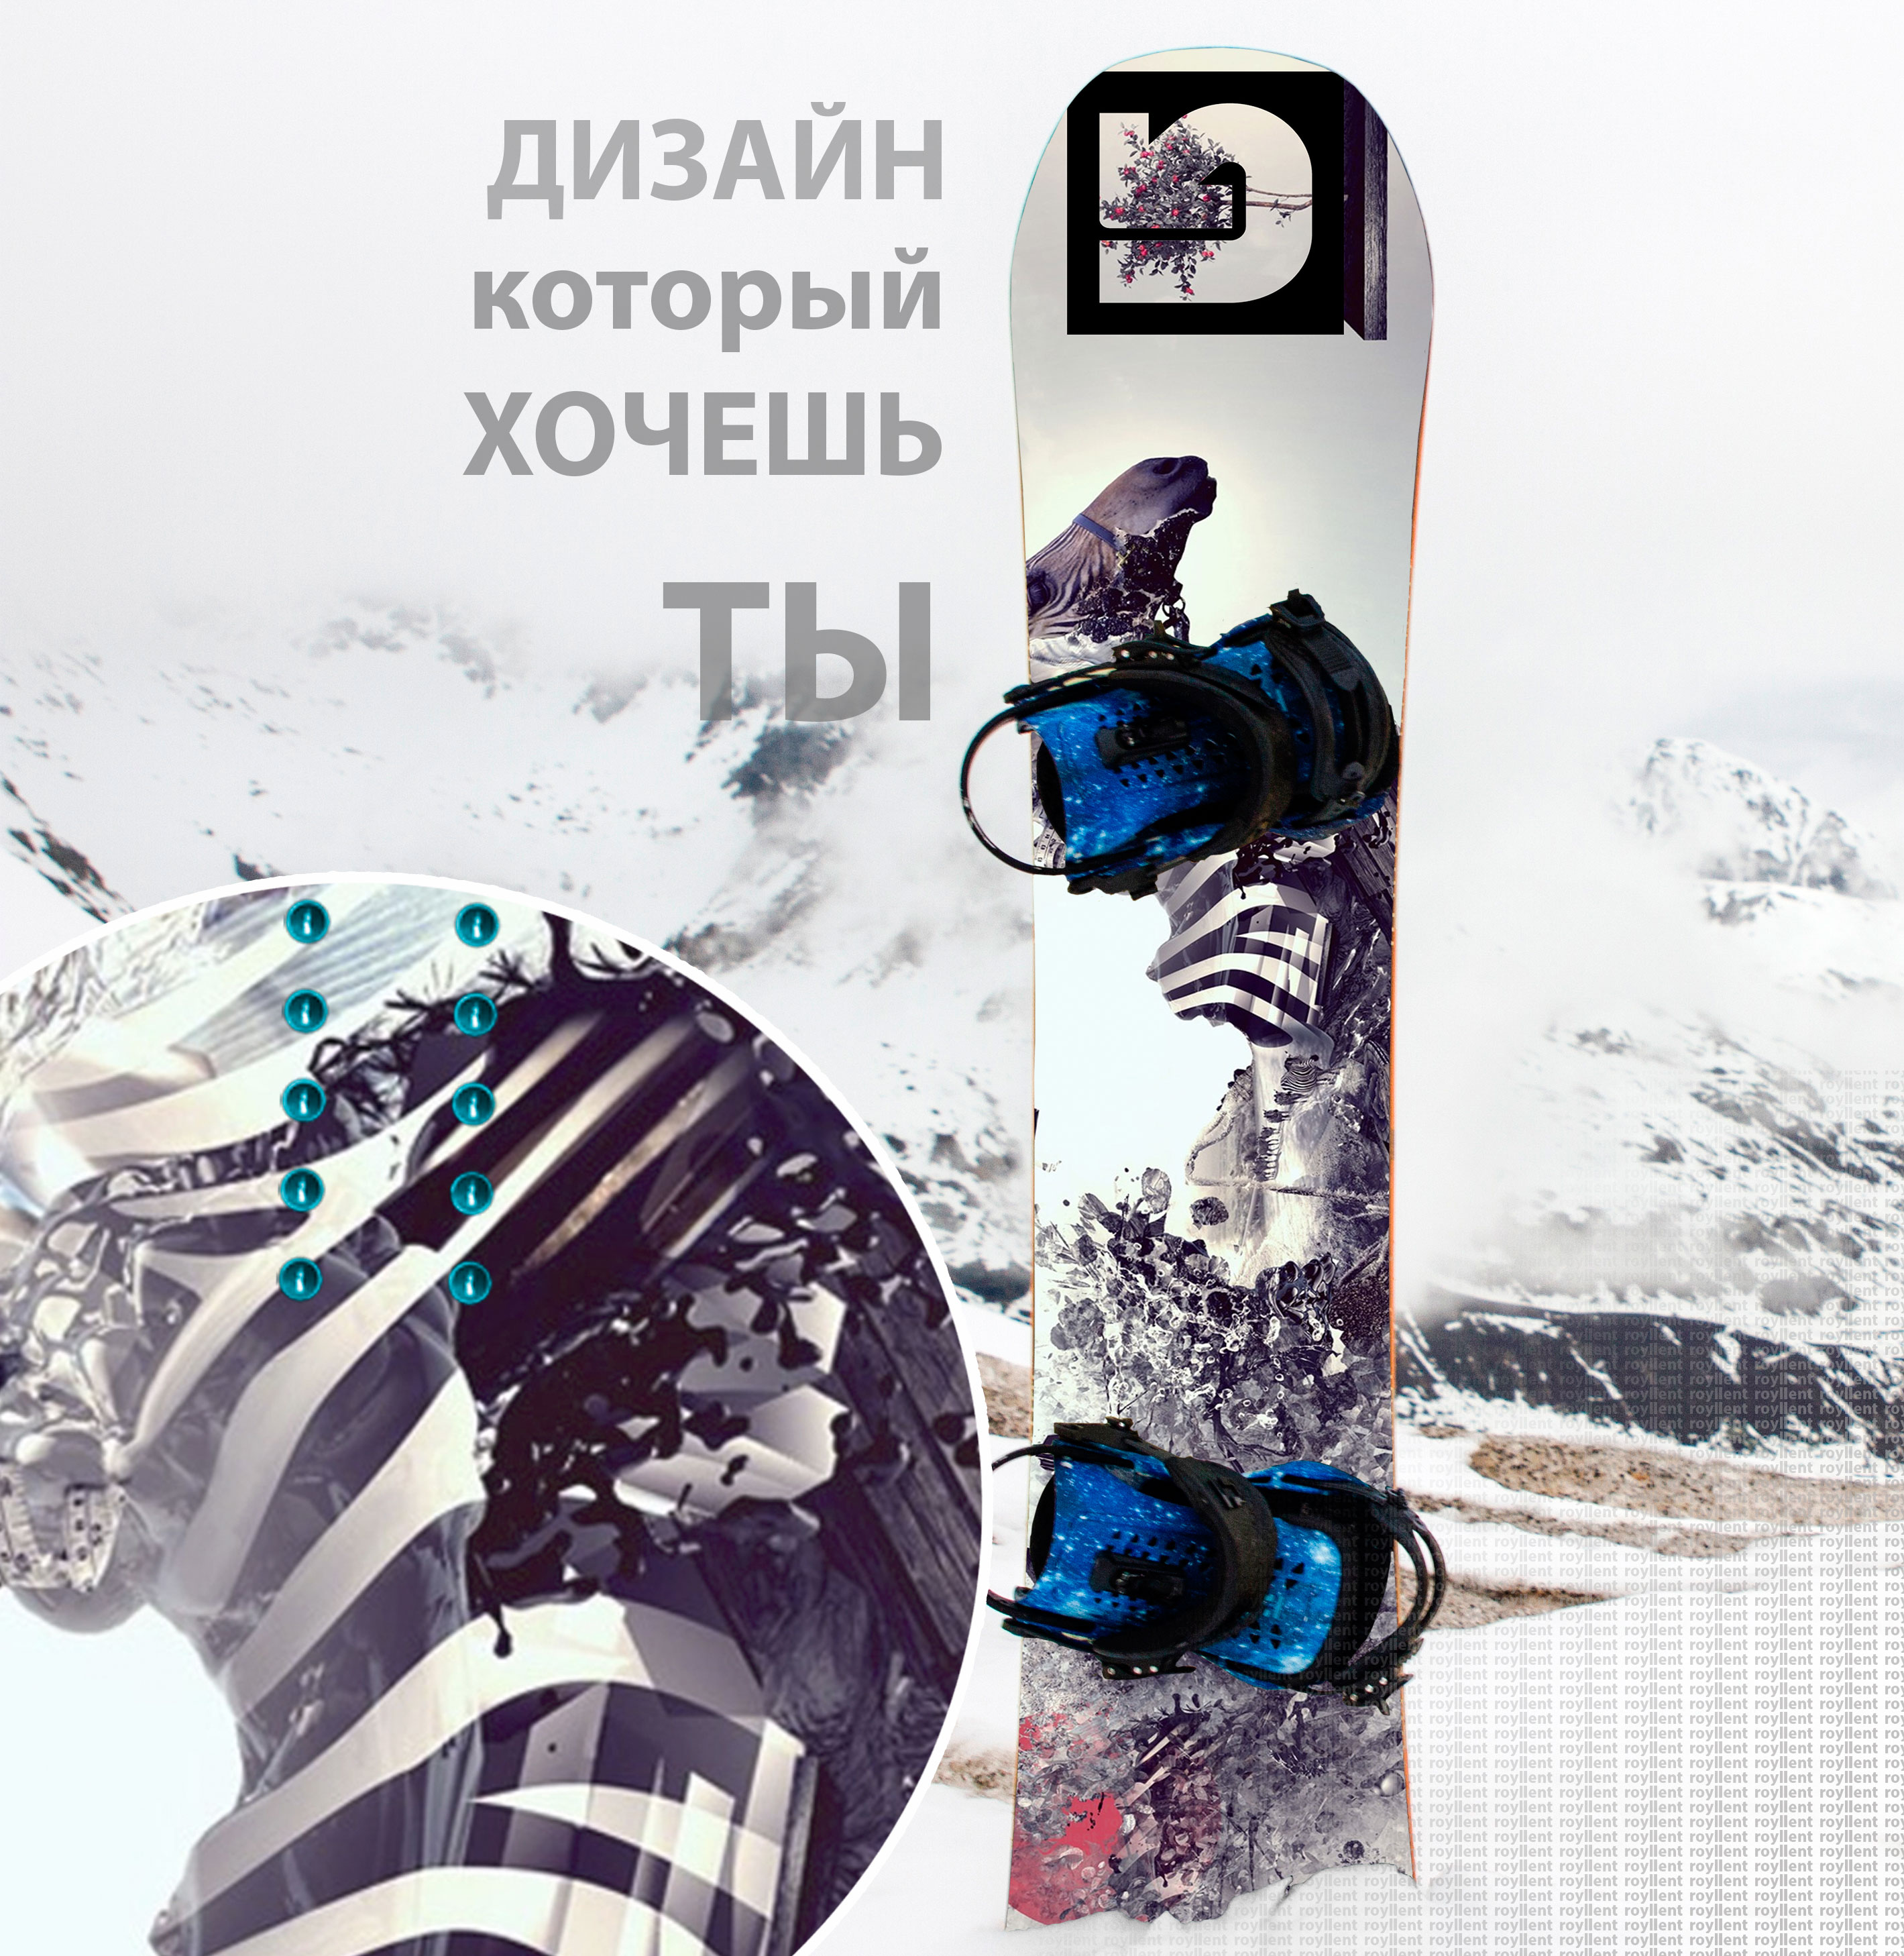 Burton snowboard design 2106